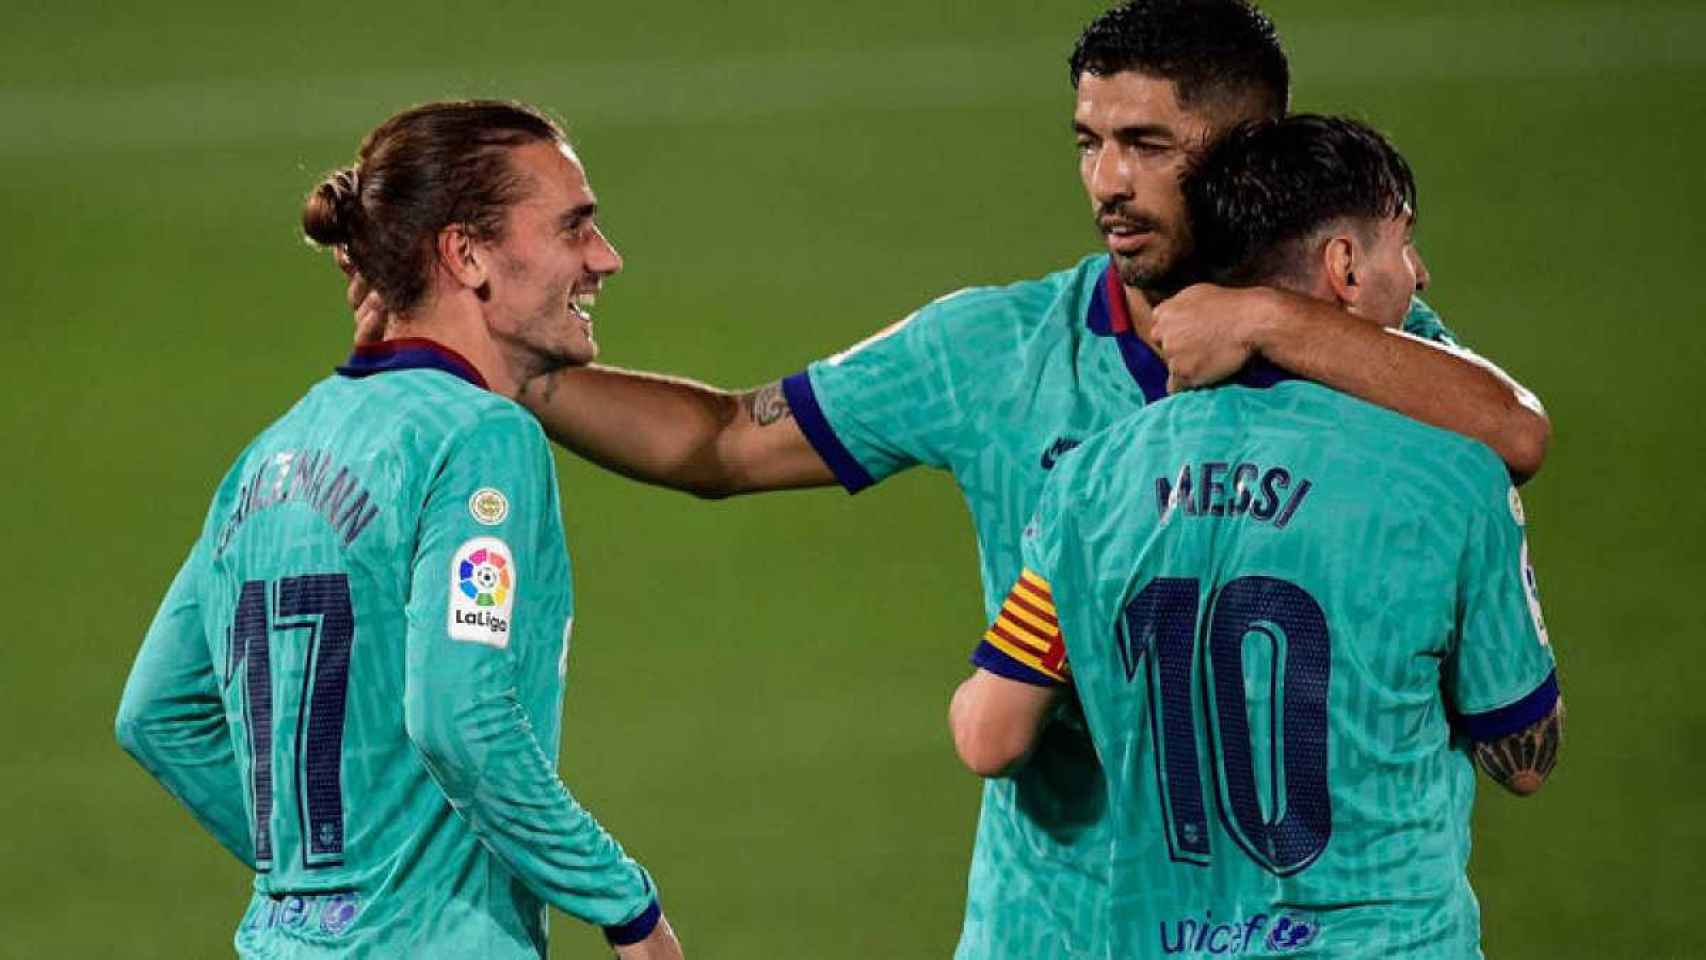 Messi, Suárez y Griezmann celebran un gol del Barça / EFE